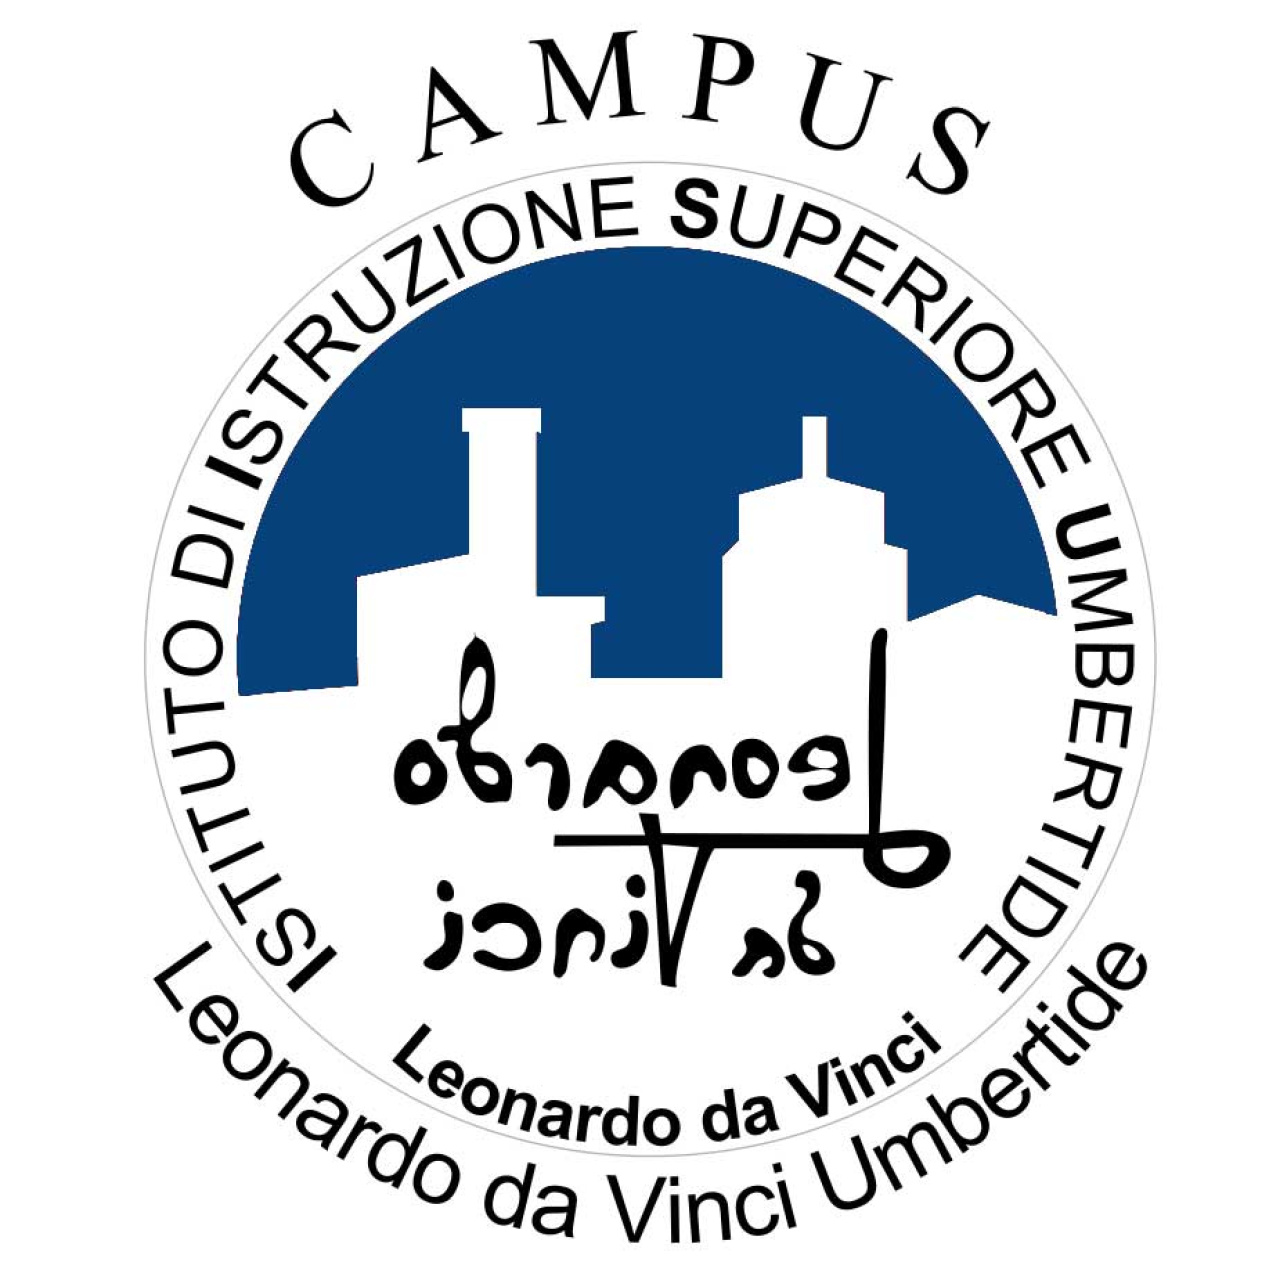 Leonardo da Vinci Umbertide Campus logo.